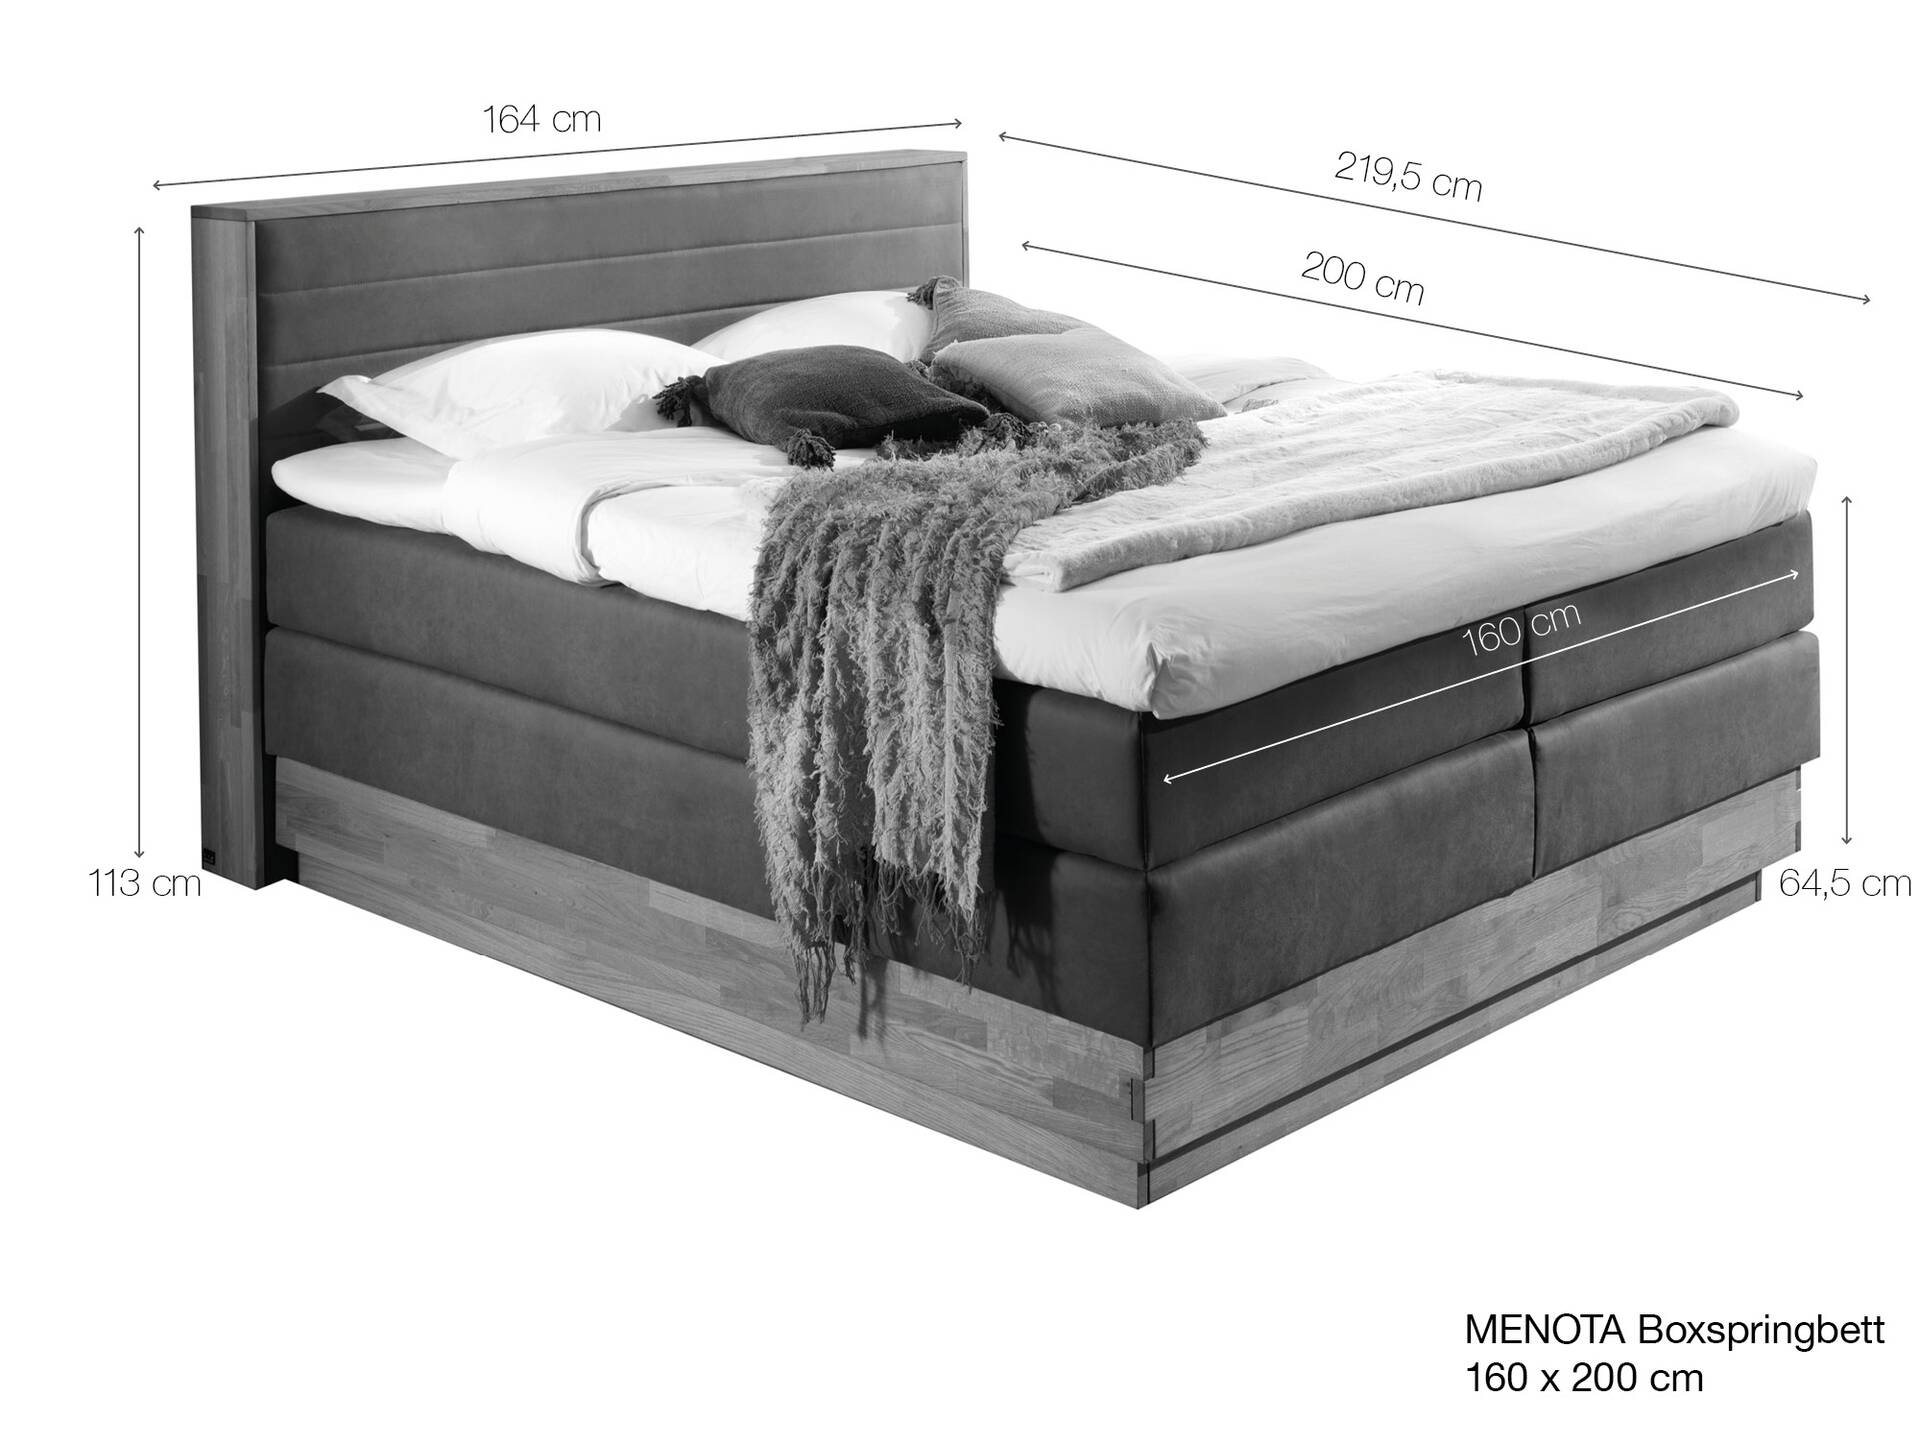 MENOTA Boxspringbett mit Bettkasten, massivem Holzrahmen und Bezug im Vintage Look 160 x 200 cm | grau | Härtegrad 2